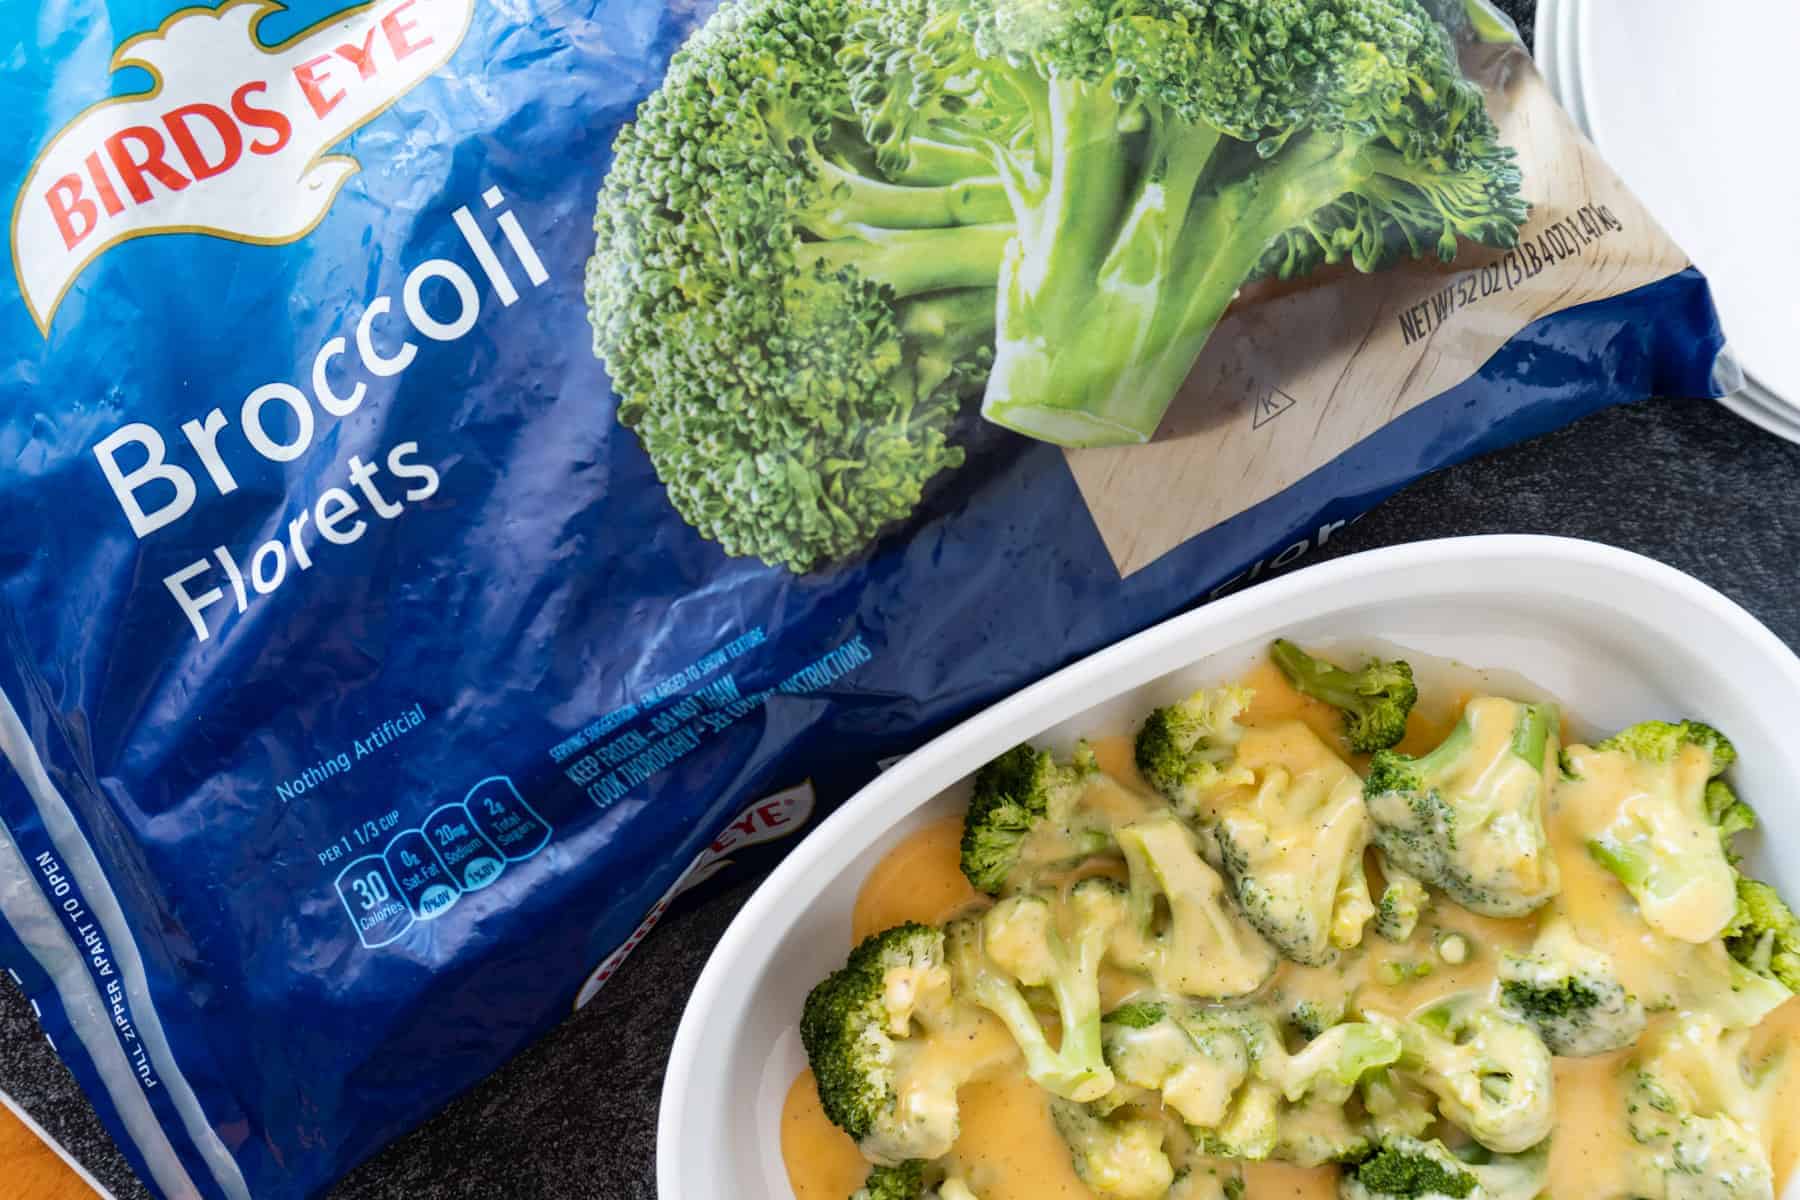 Frozen Broccoli Bag next to cheesy broccoli dish